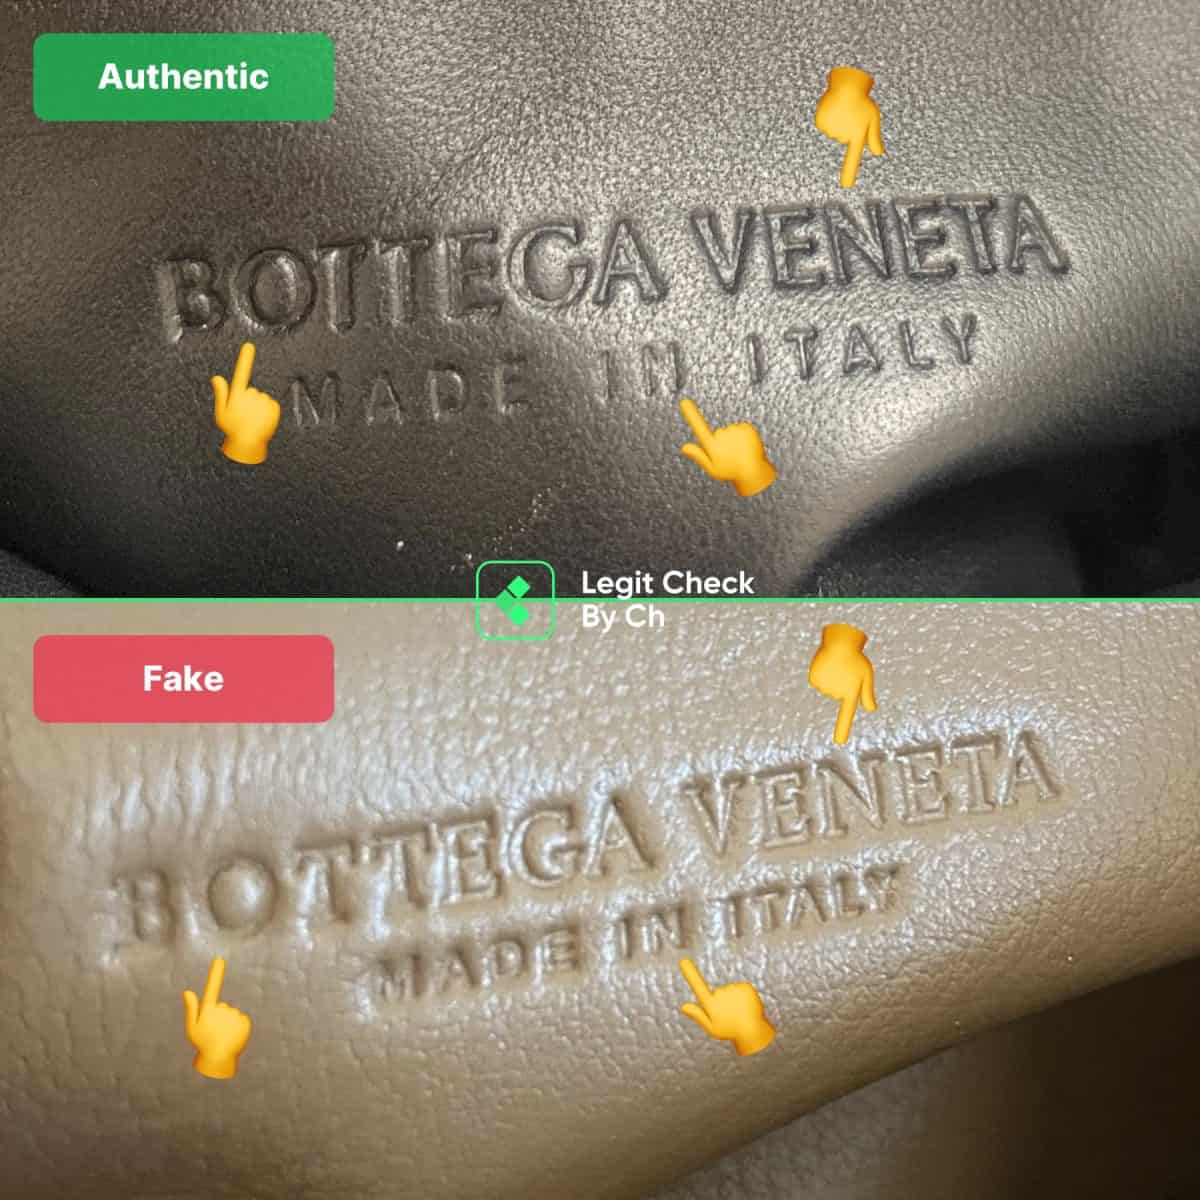 Real vs Fake Bottega Veneta bag